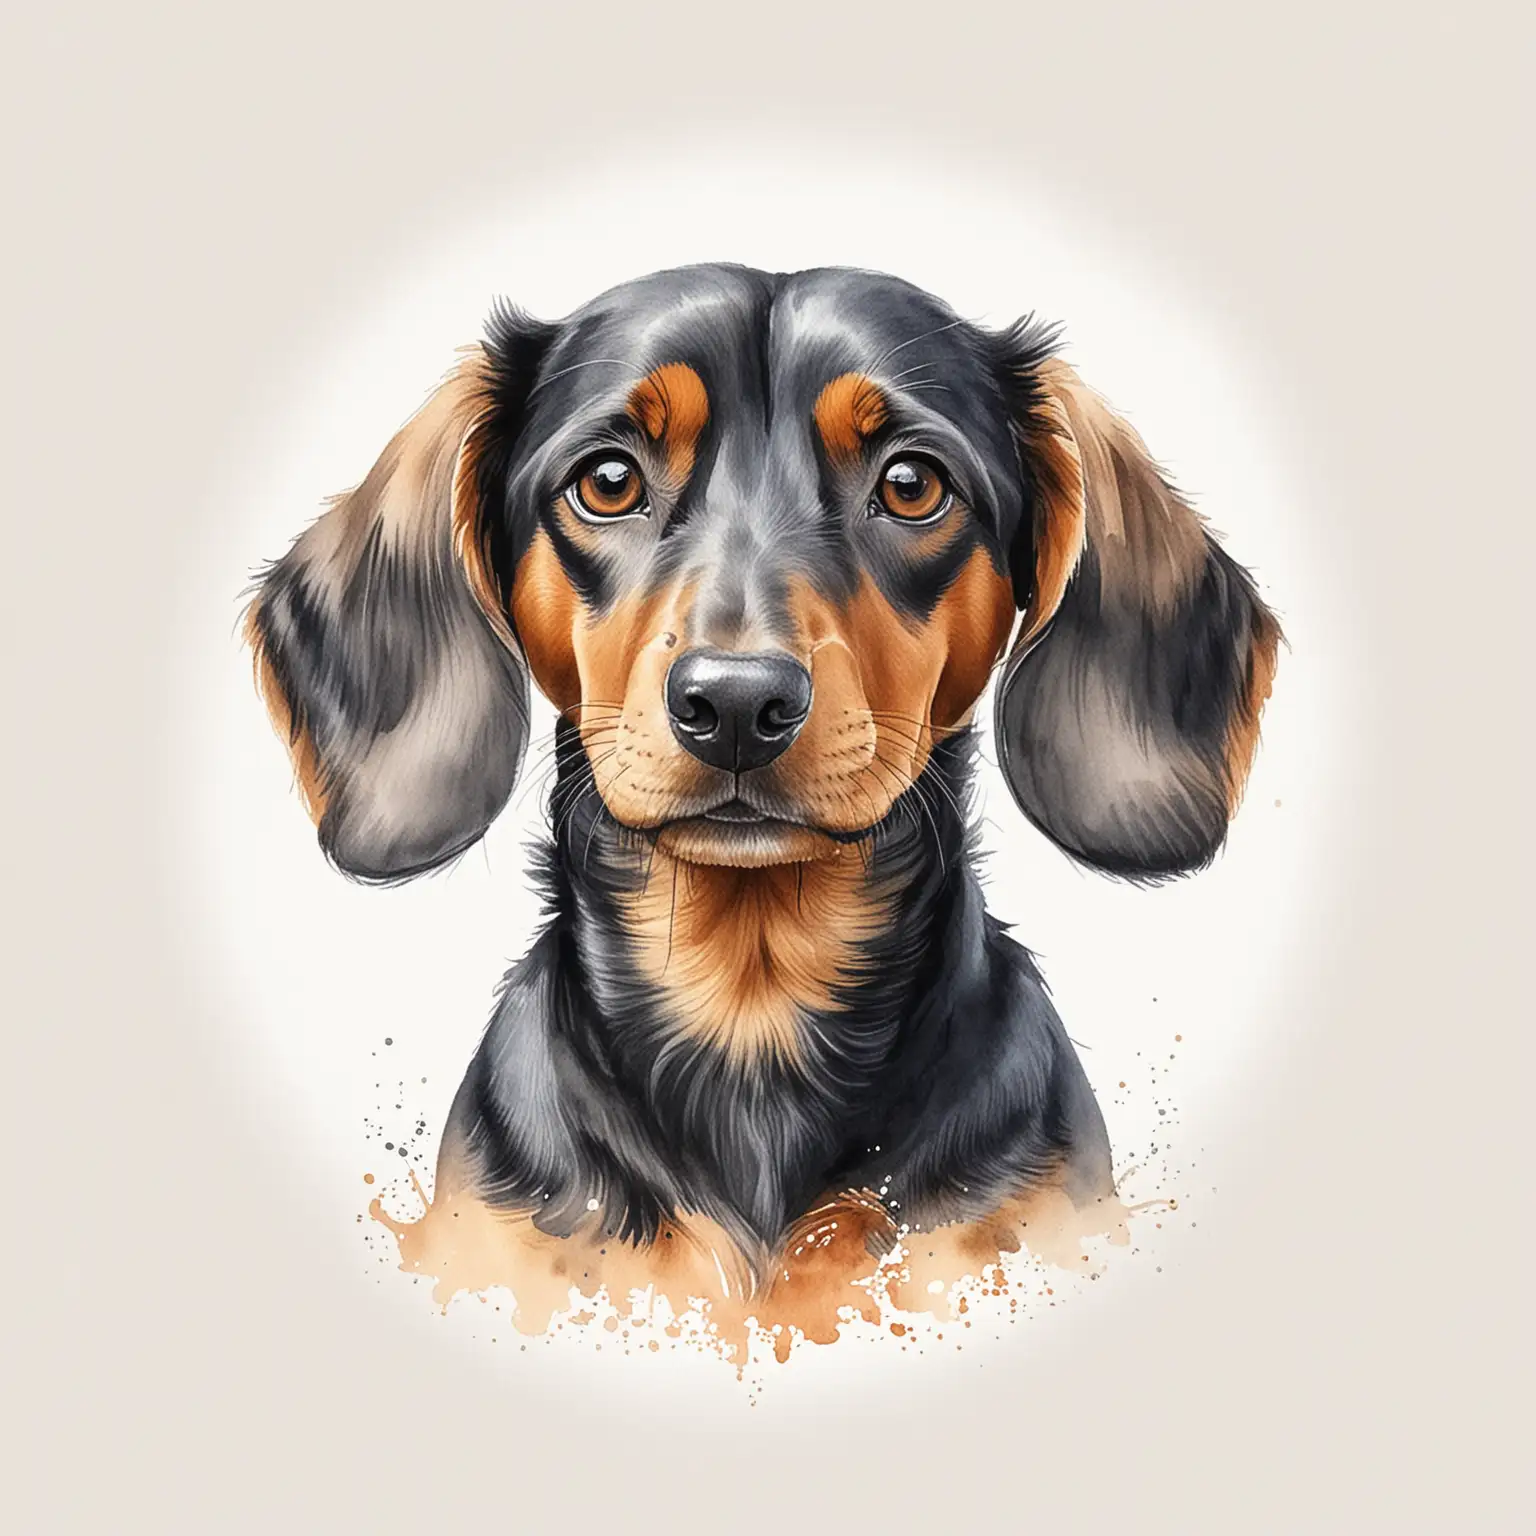 Adorable Dachshund Dog Watercolor Illustration on White Background